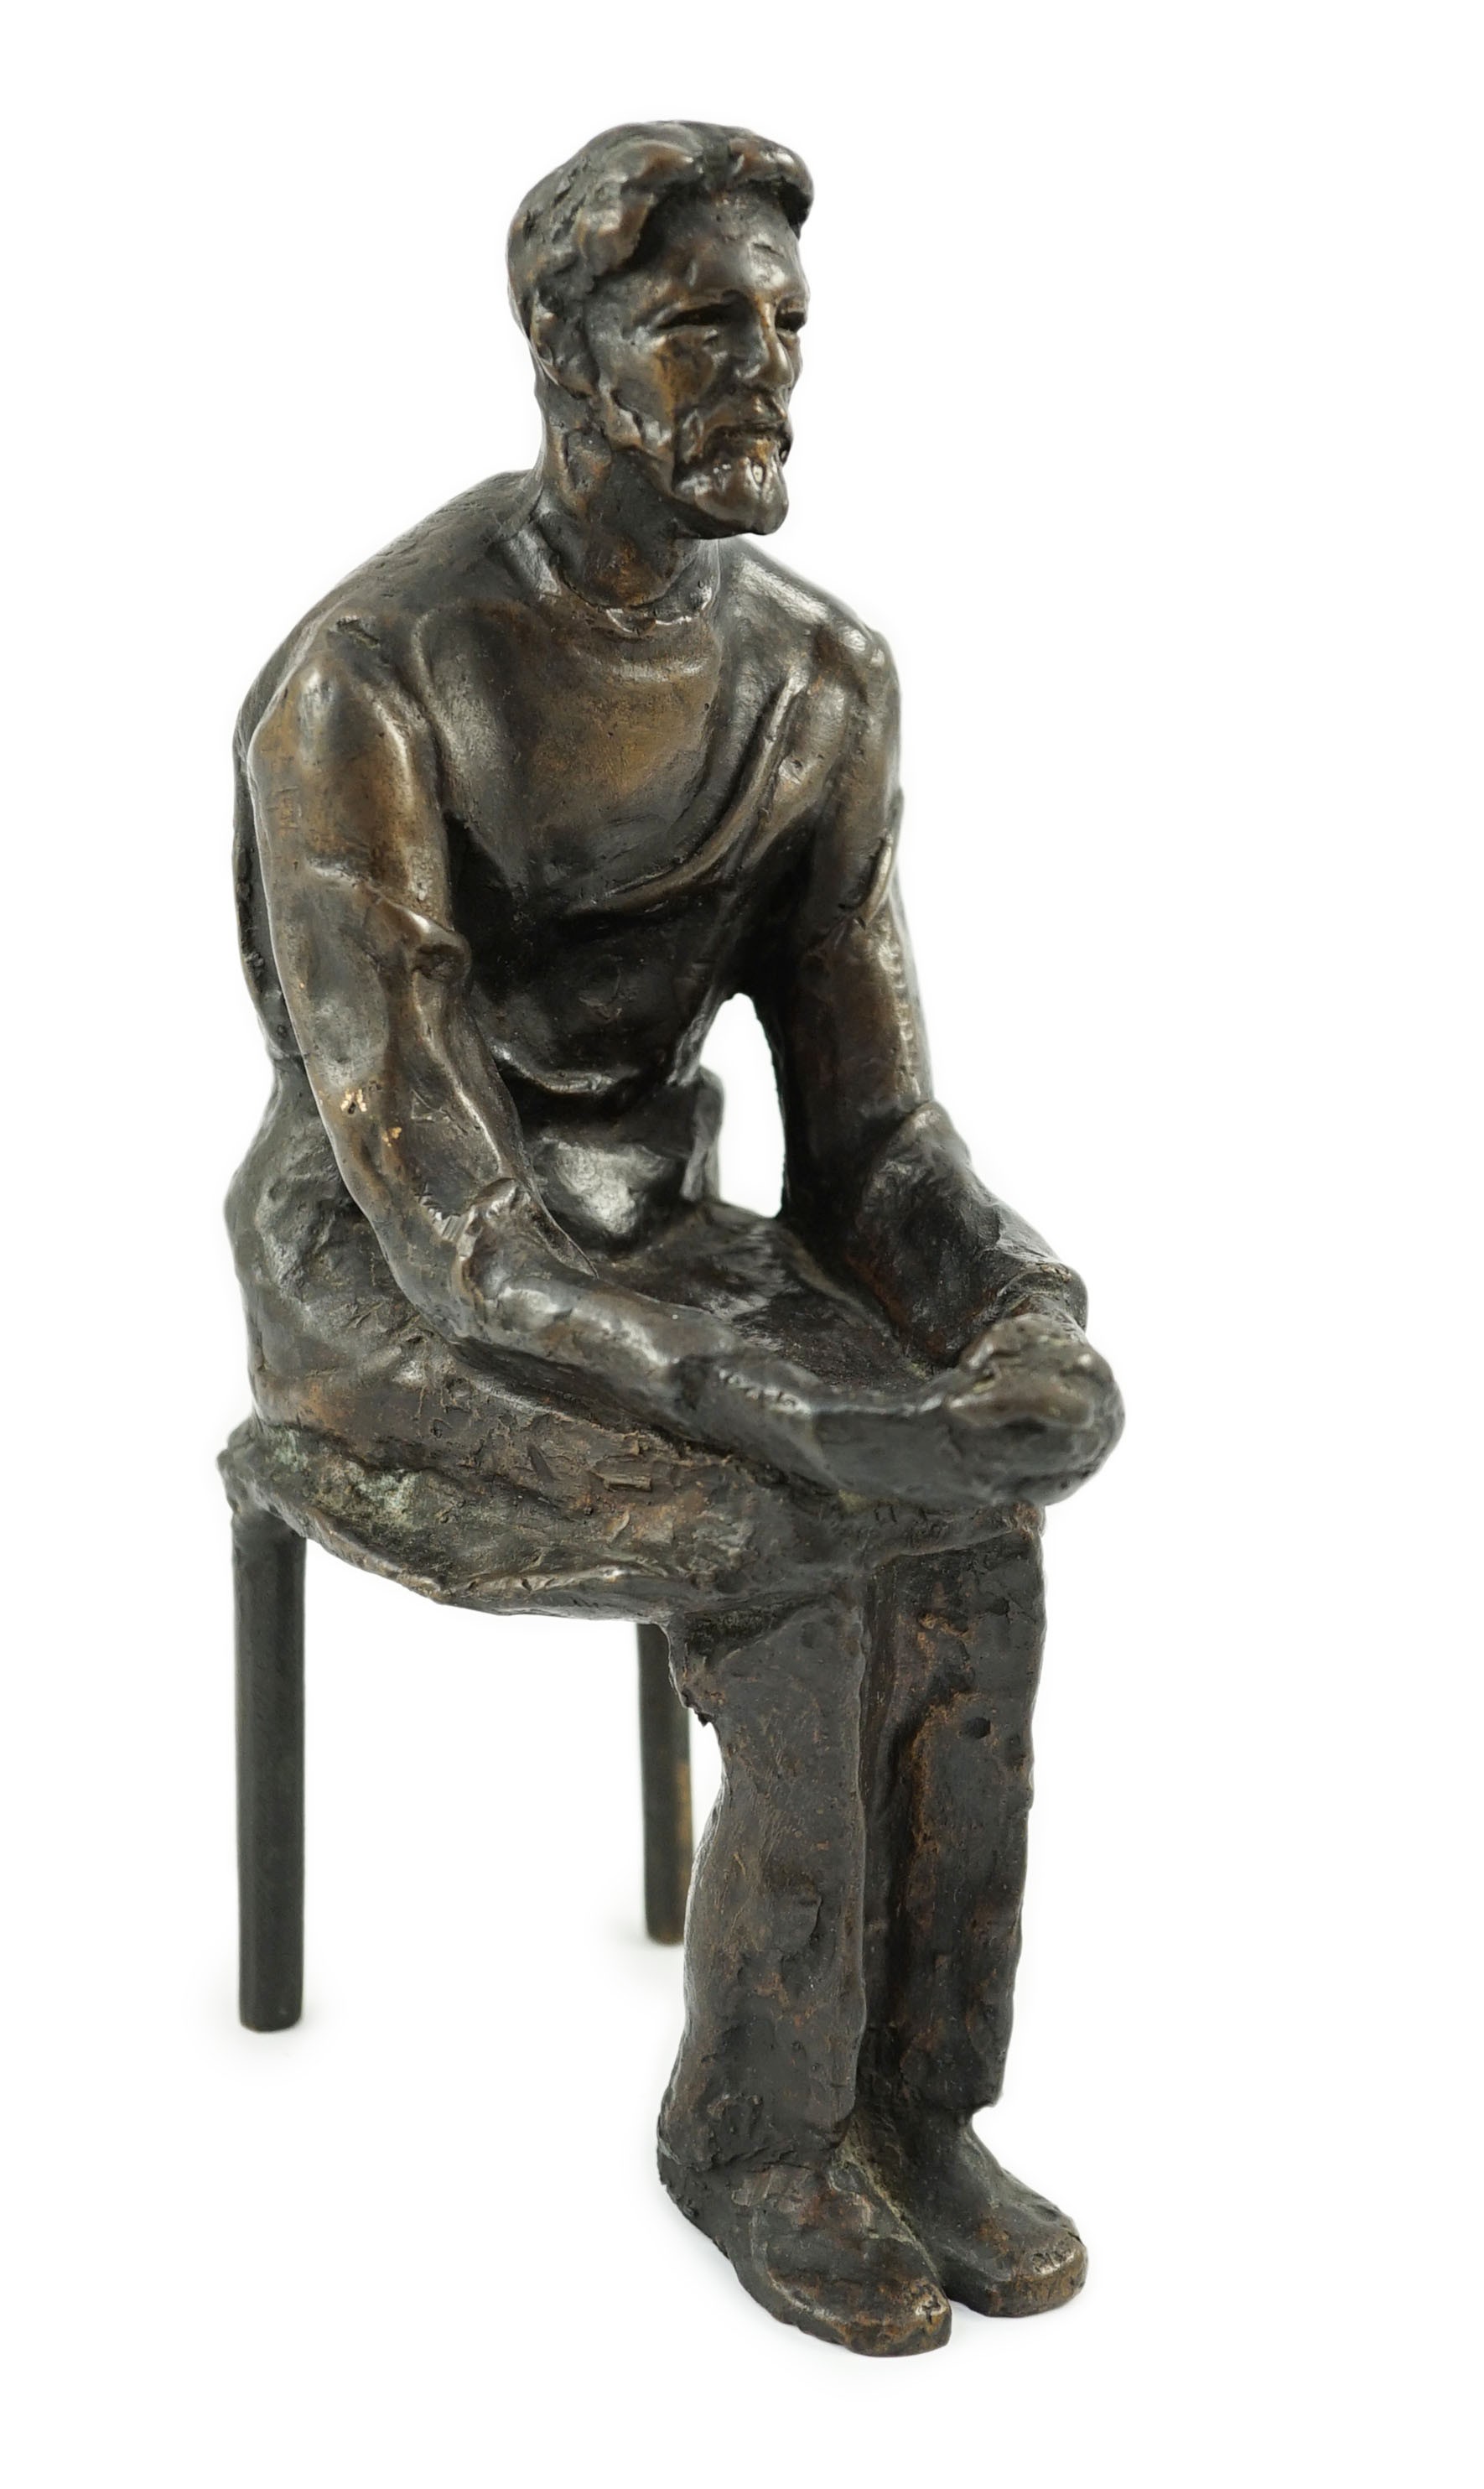 Fredda Brilliant (Polish, 1903-1999). A cast bronze figure of Anton Chekhov (Russian, 1860-1904), playwright and short story writer), depth 13cm height 22cm                                                                